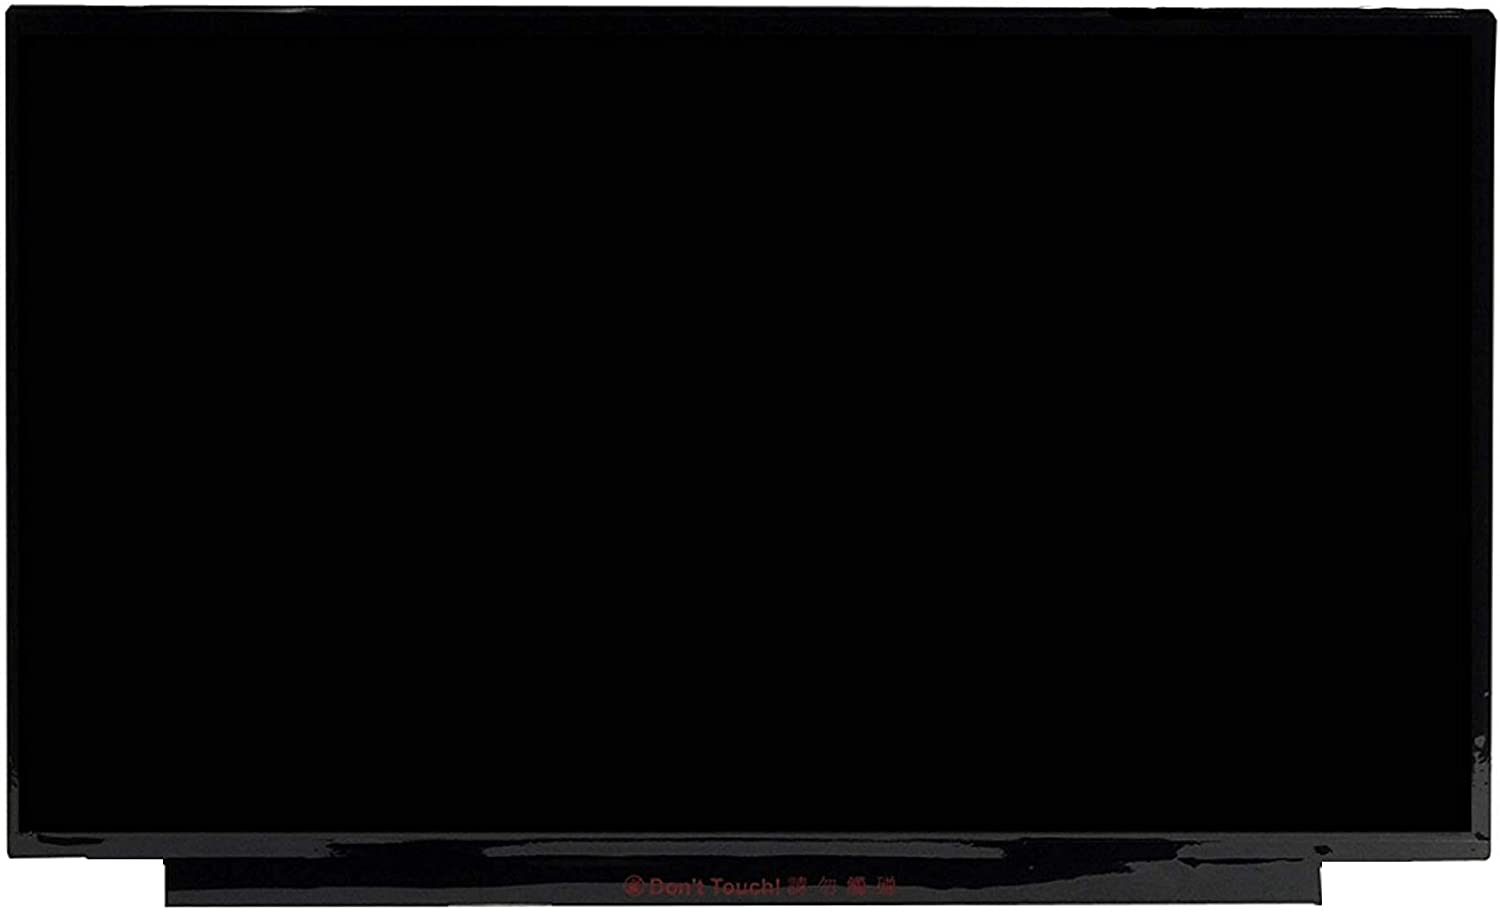 L14384-001 pantalla LCD LED 14 "UHD 4K pantalla 400n panel nuevo (panel crudo solamente)